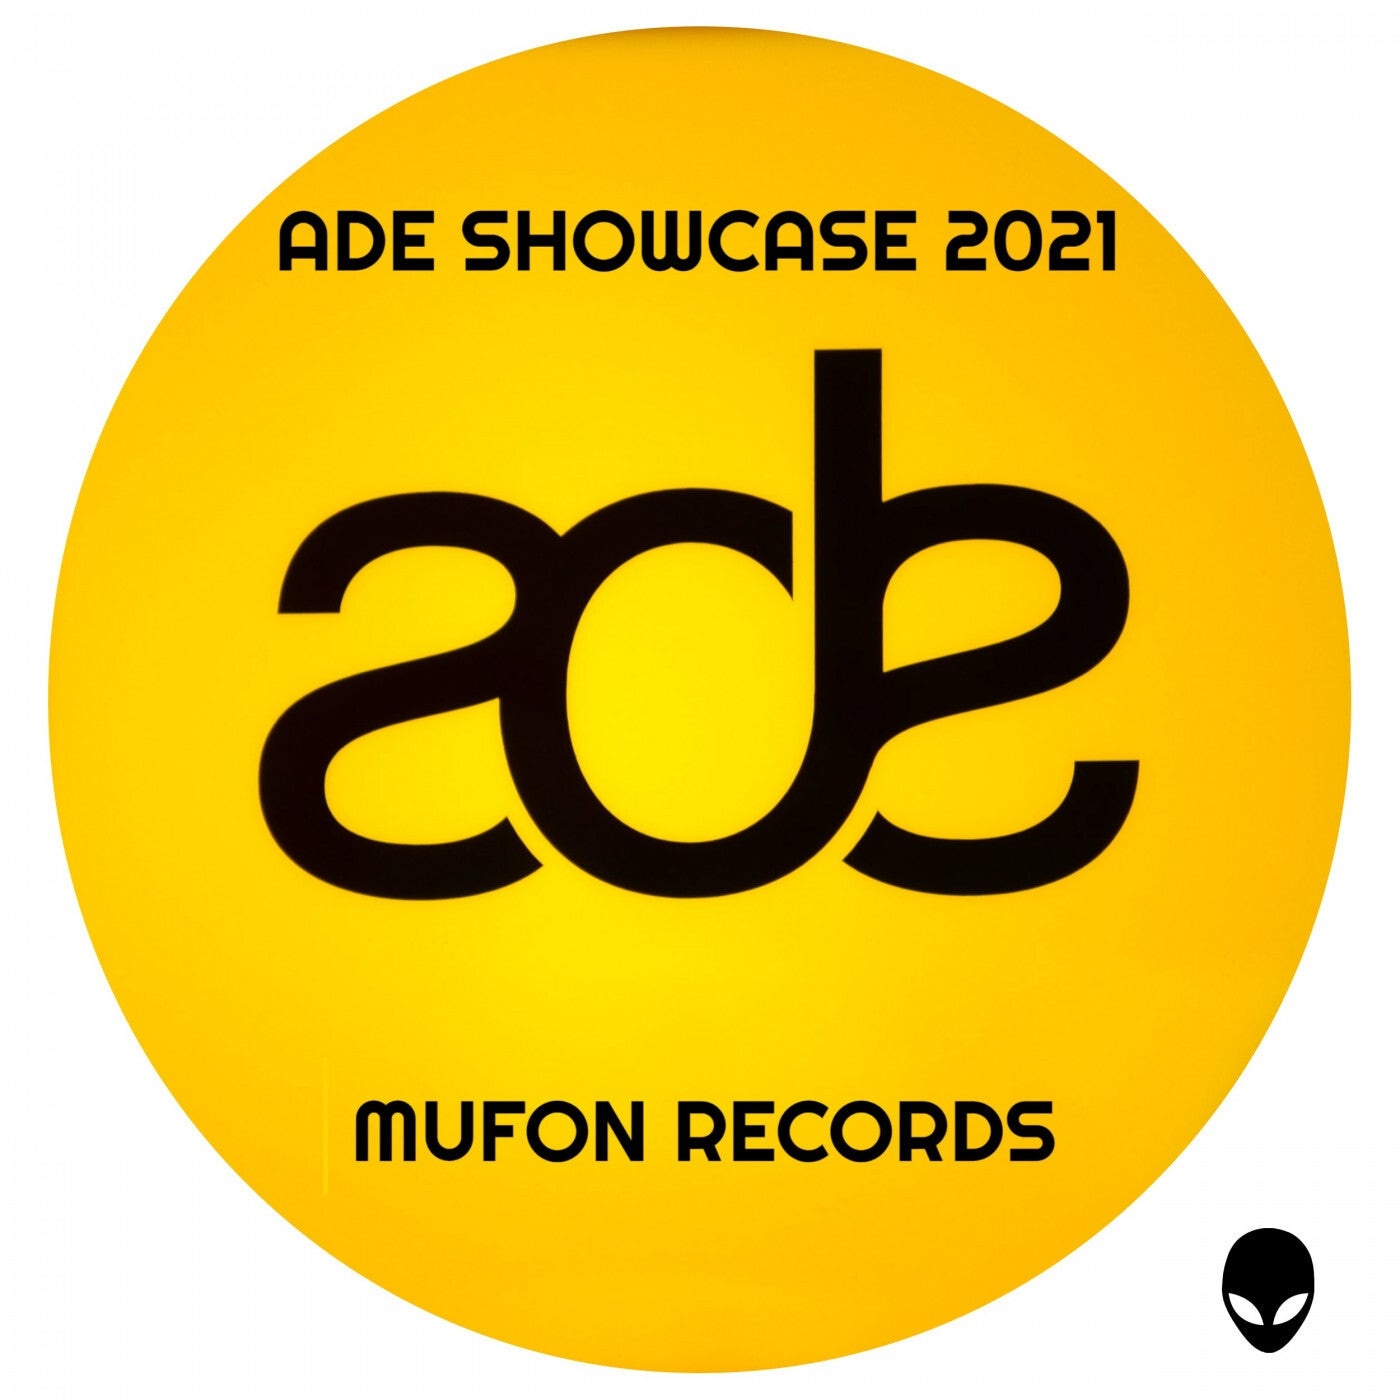 VA - MUFON RECORDS ADE SHOWCASE 2021 [MFR120]